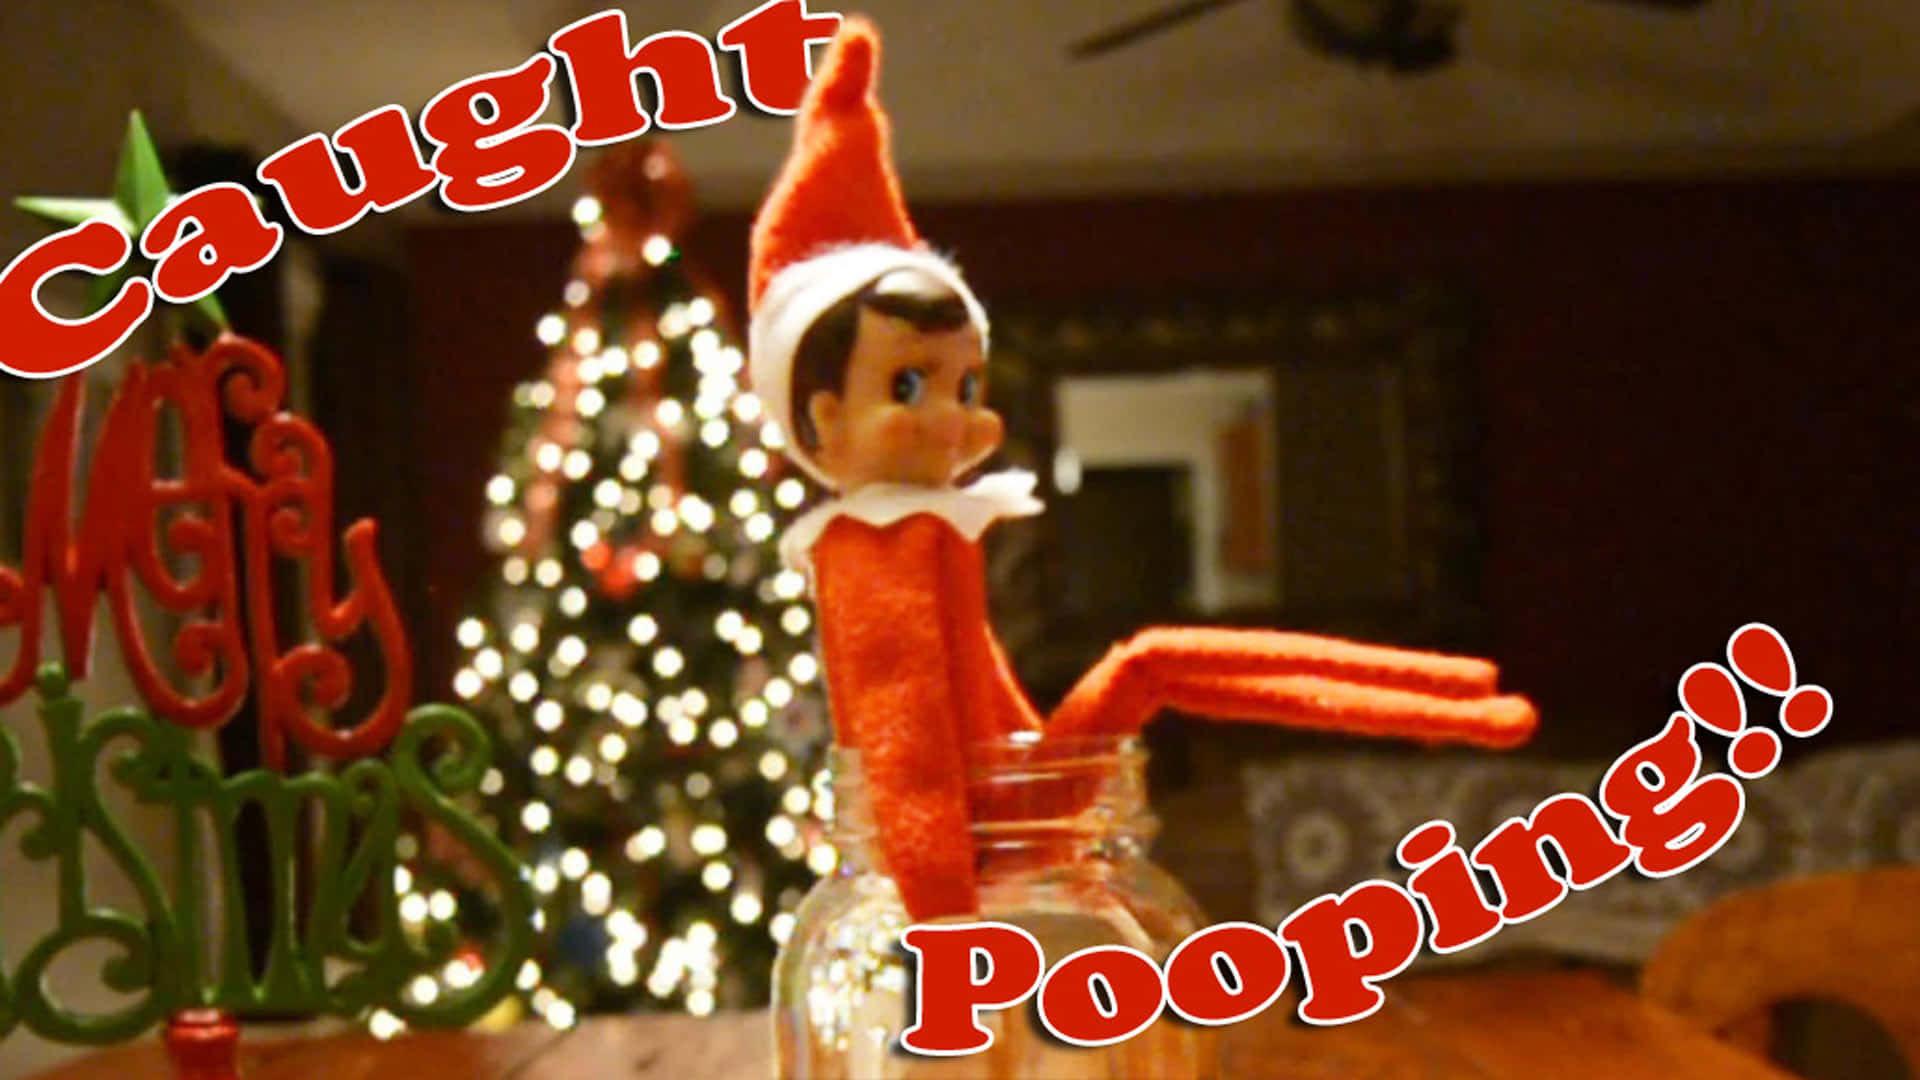 Celebrate the Christmas season with Elf on the Shelf!